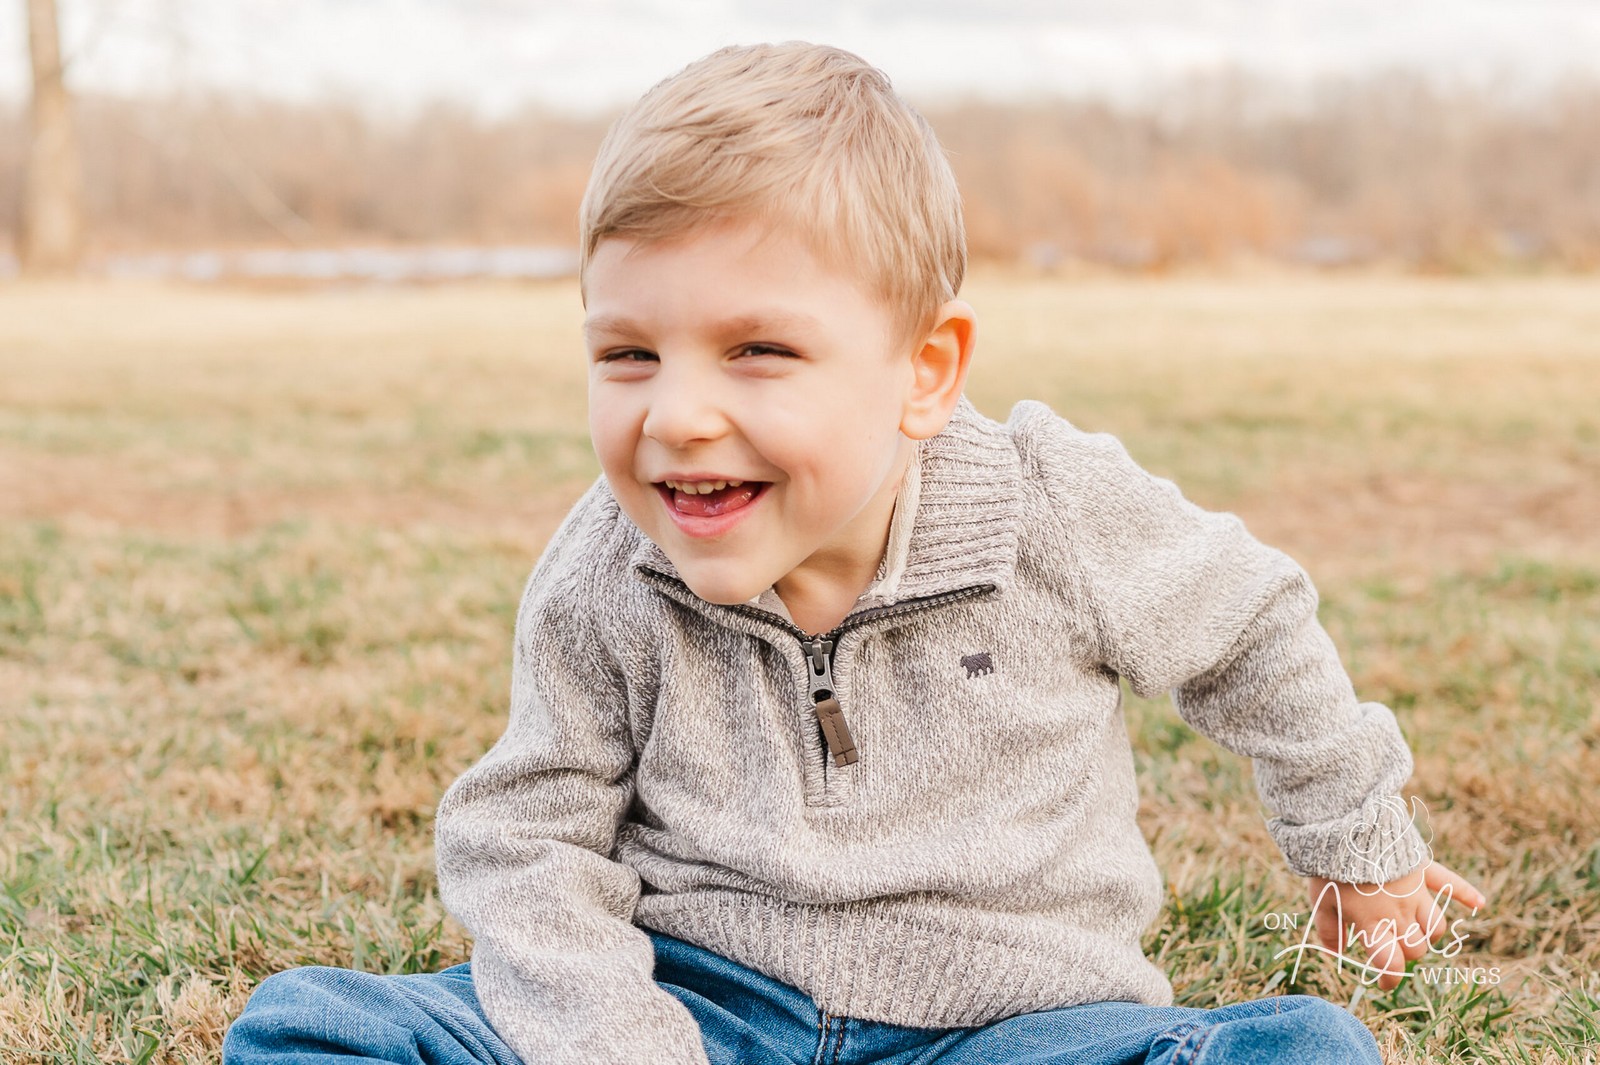 Easton | Micro Preemie to Five Years